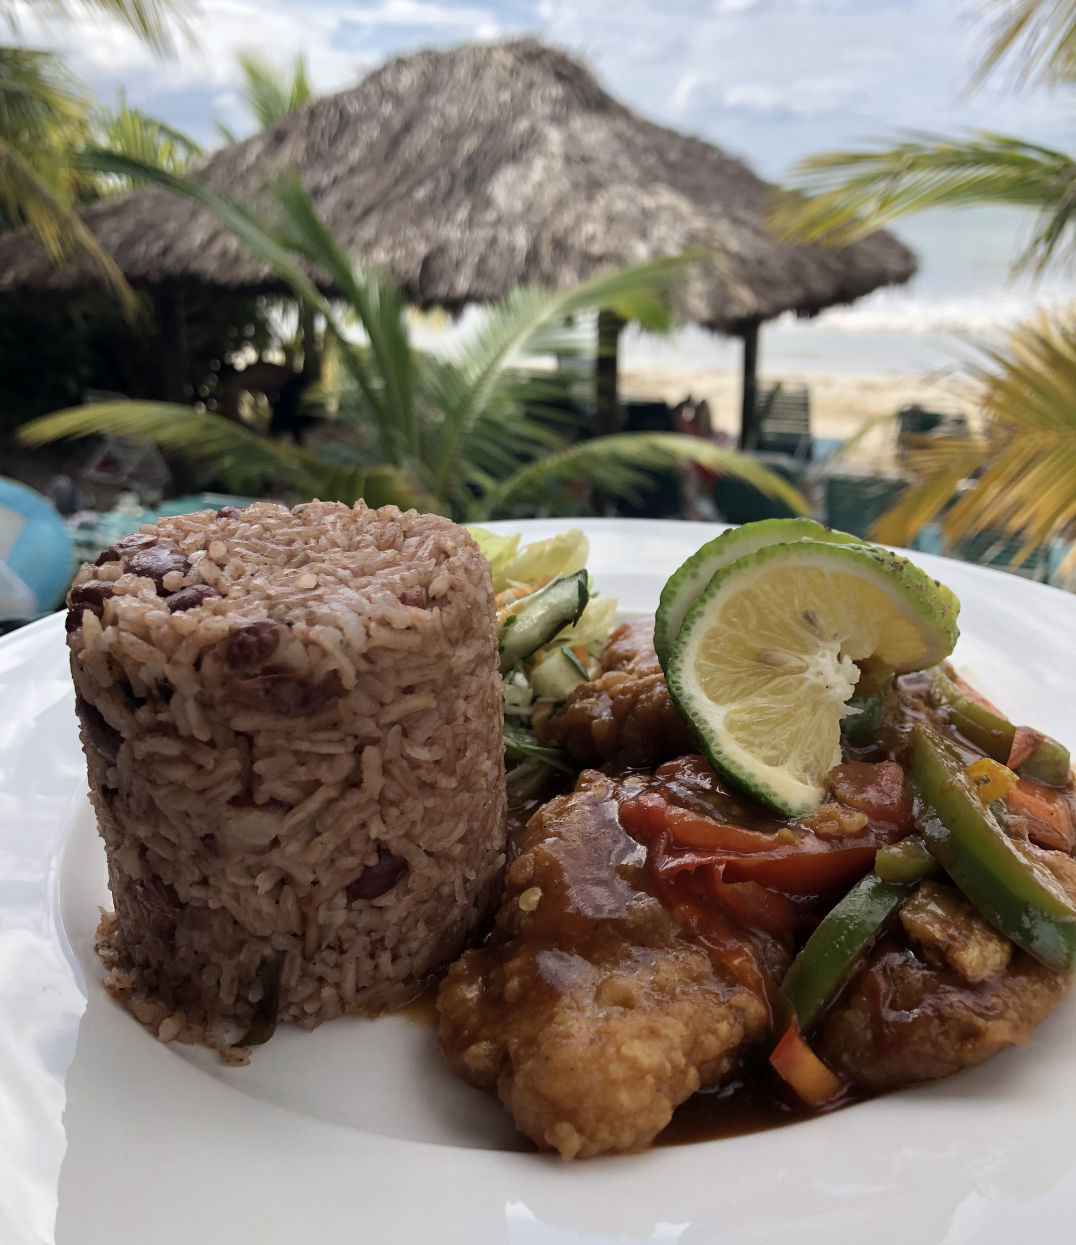 Indie 957 Restaurant at White Sands in Negril Jamaica